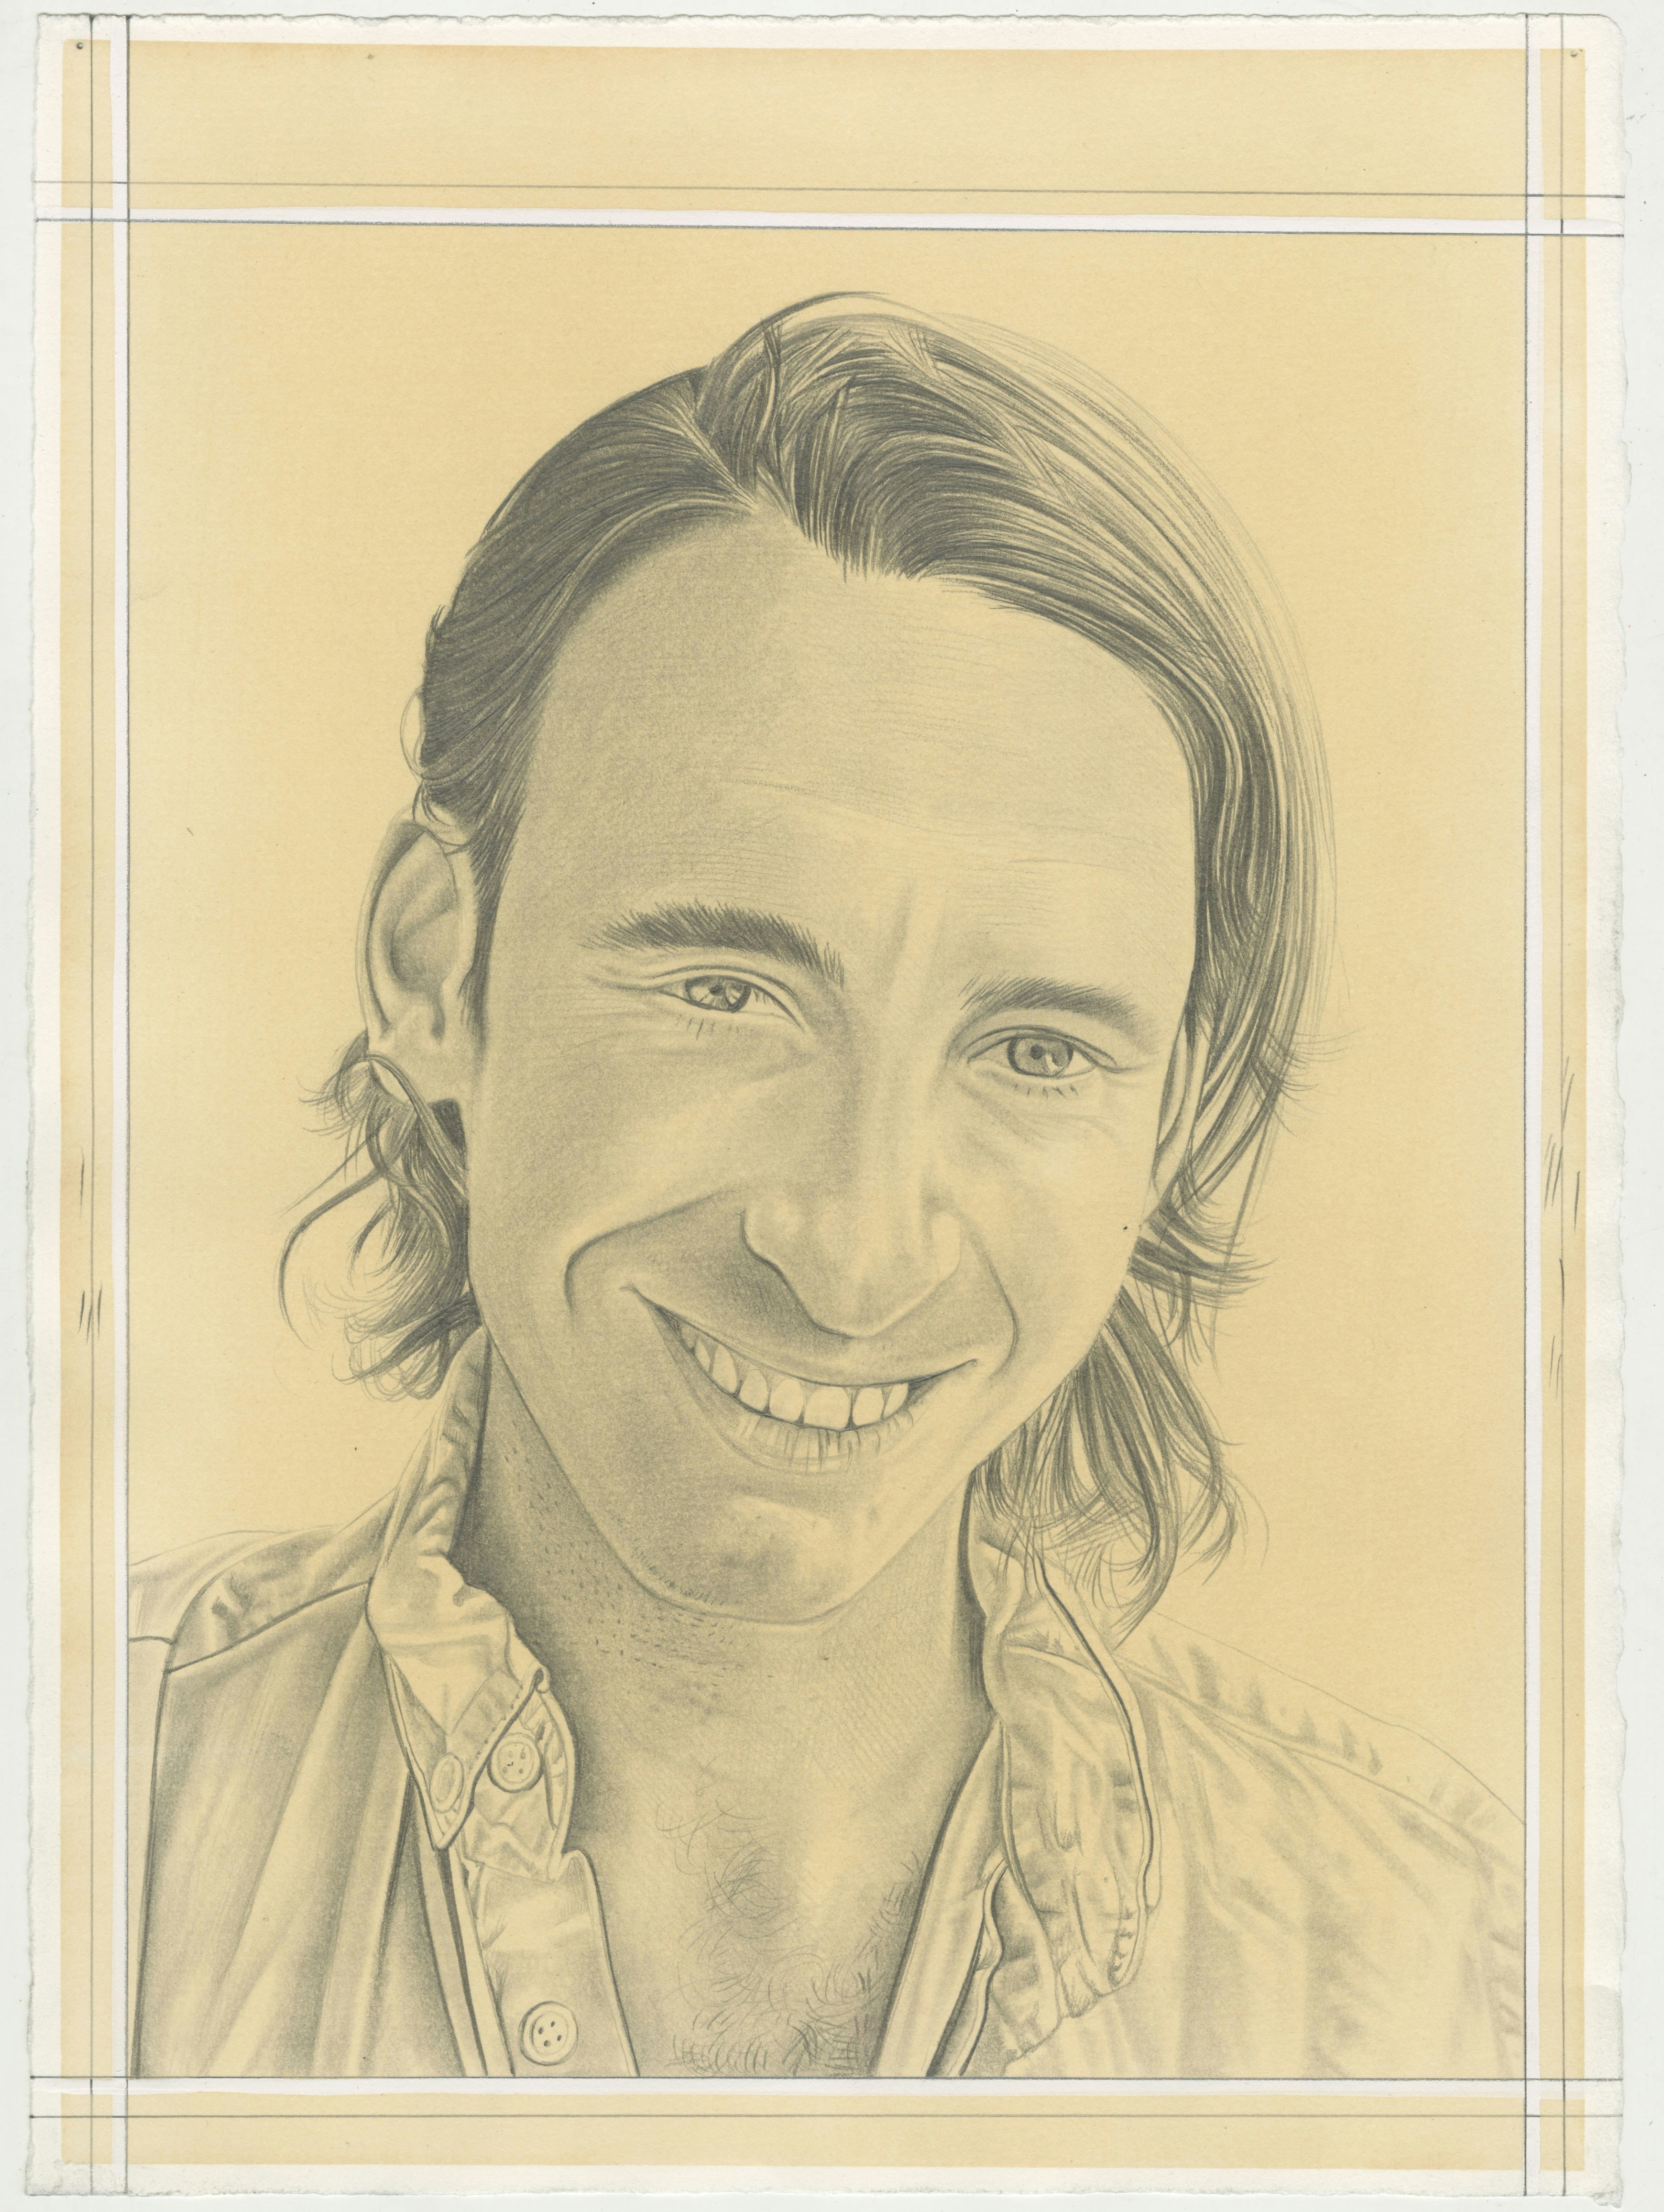 Portrait of Erik Lindman, pencil on paper by Phong H. Bui.